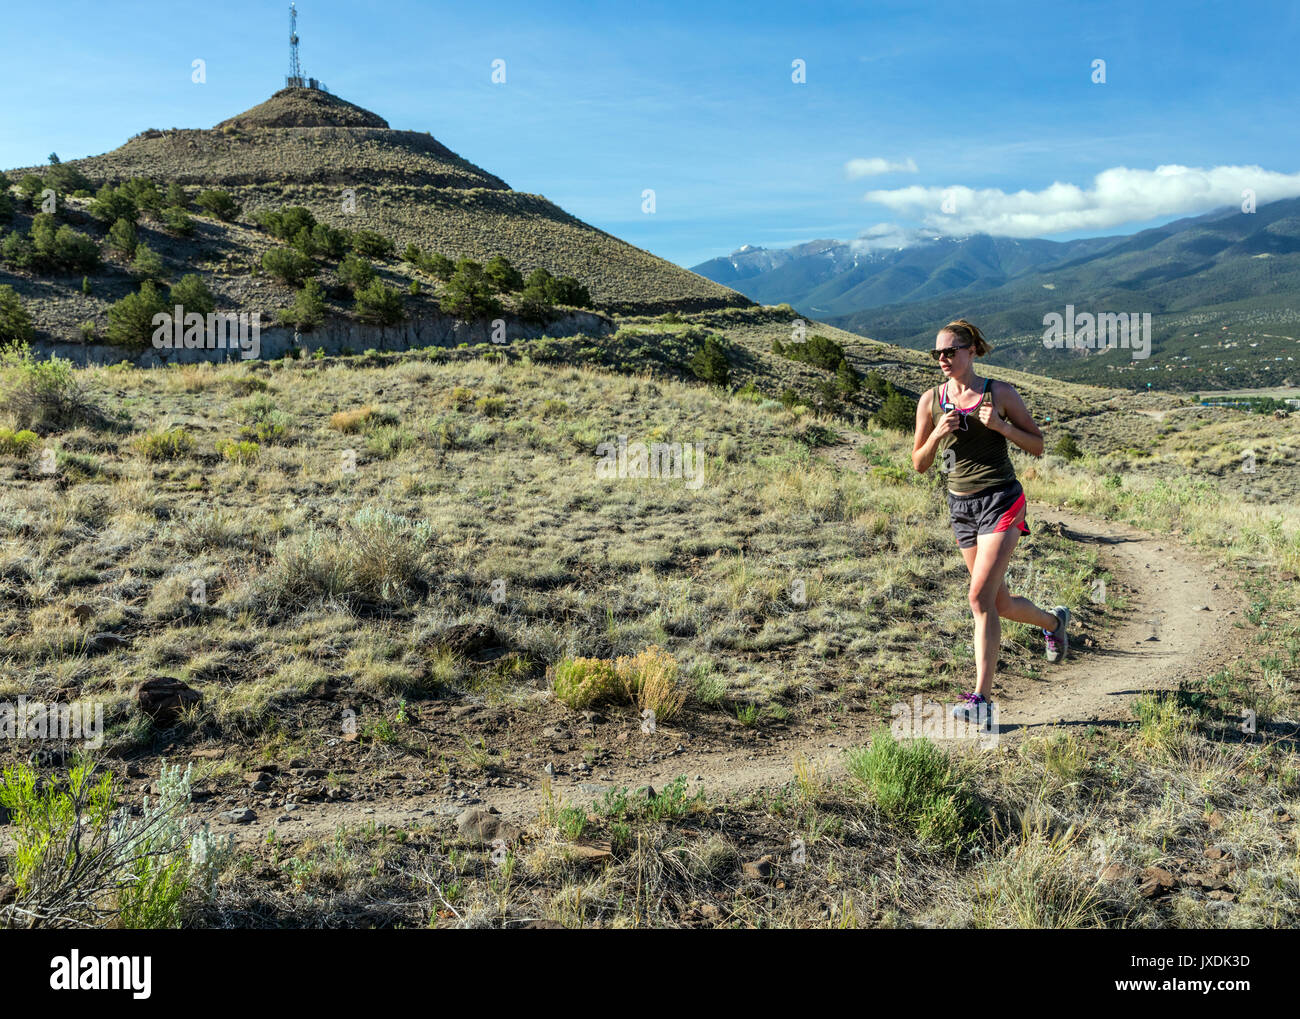 Läuferinnen konkurrieren in der Fibark Festival Trail Run; Salida, Colorado, USA Stockfoto